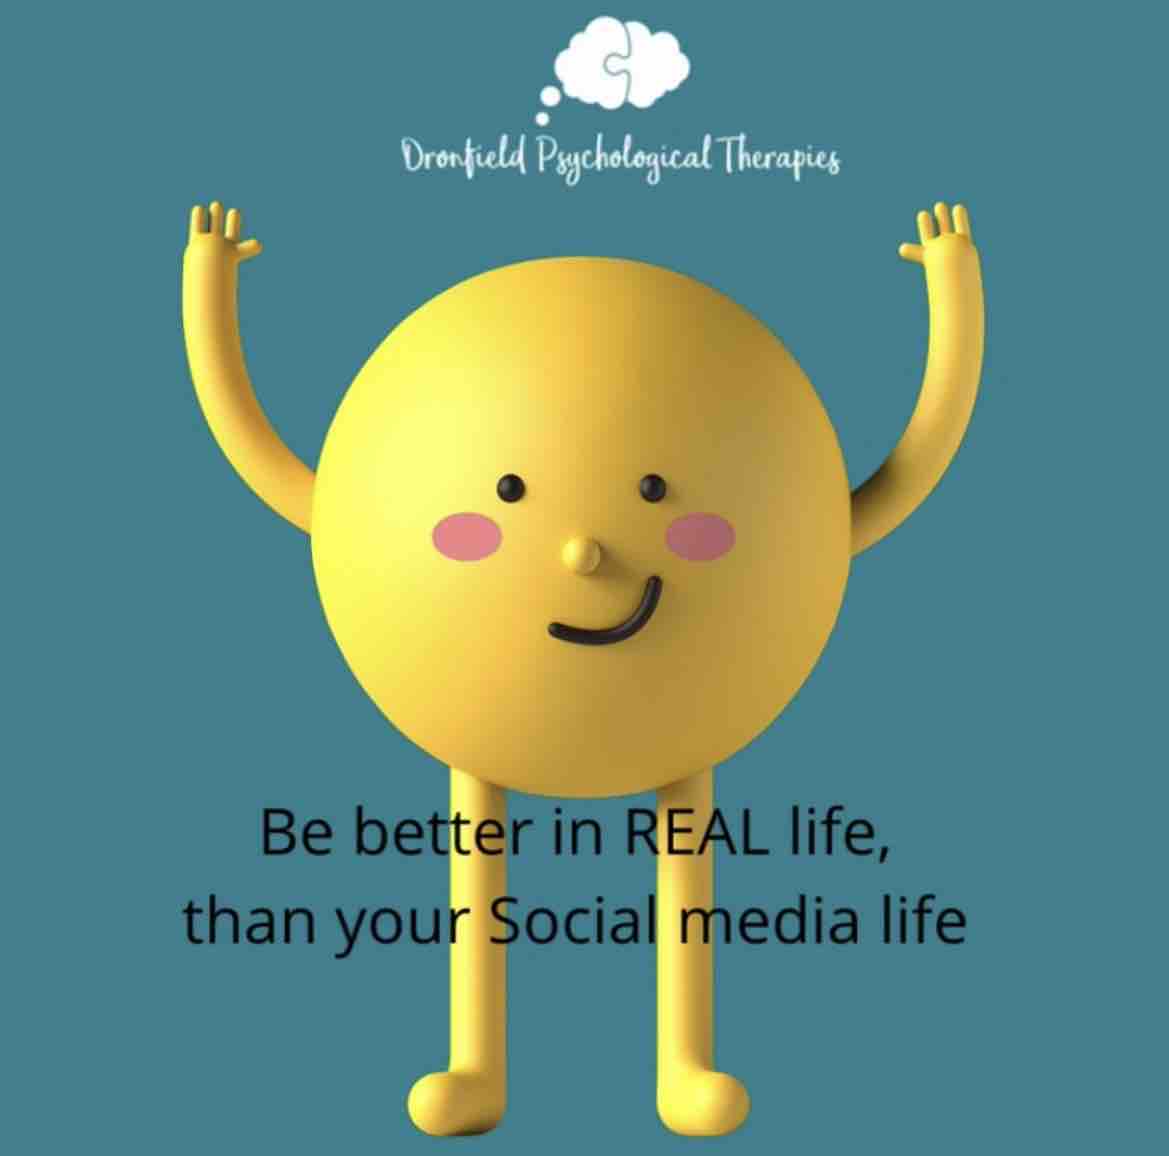 Live a better real life than your social media life 😊 #SocialMedia #PuttingOnAFront #MondayMantra #TakingBackControl #YouMatter #YouRock #PrioritiseYou #SelfCare #SelfCareIsNotSelfish #SelfCareMatters #SelfLove #SelfPreservation #FillYourOwnCupFirst #KeepGoing #ValueYou